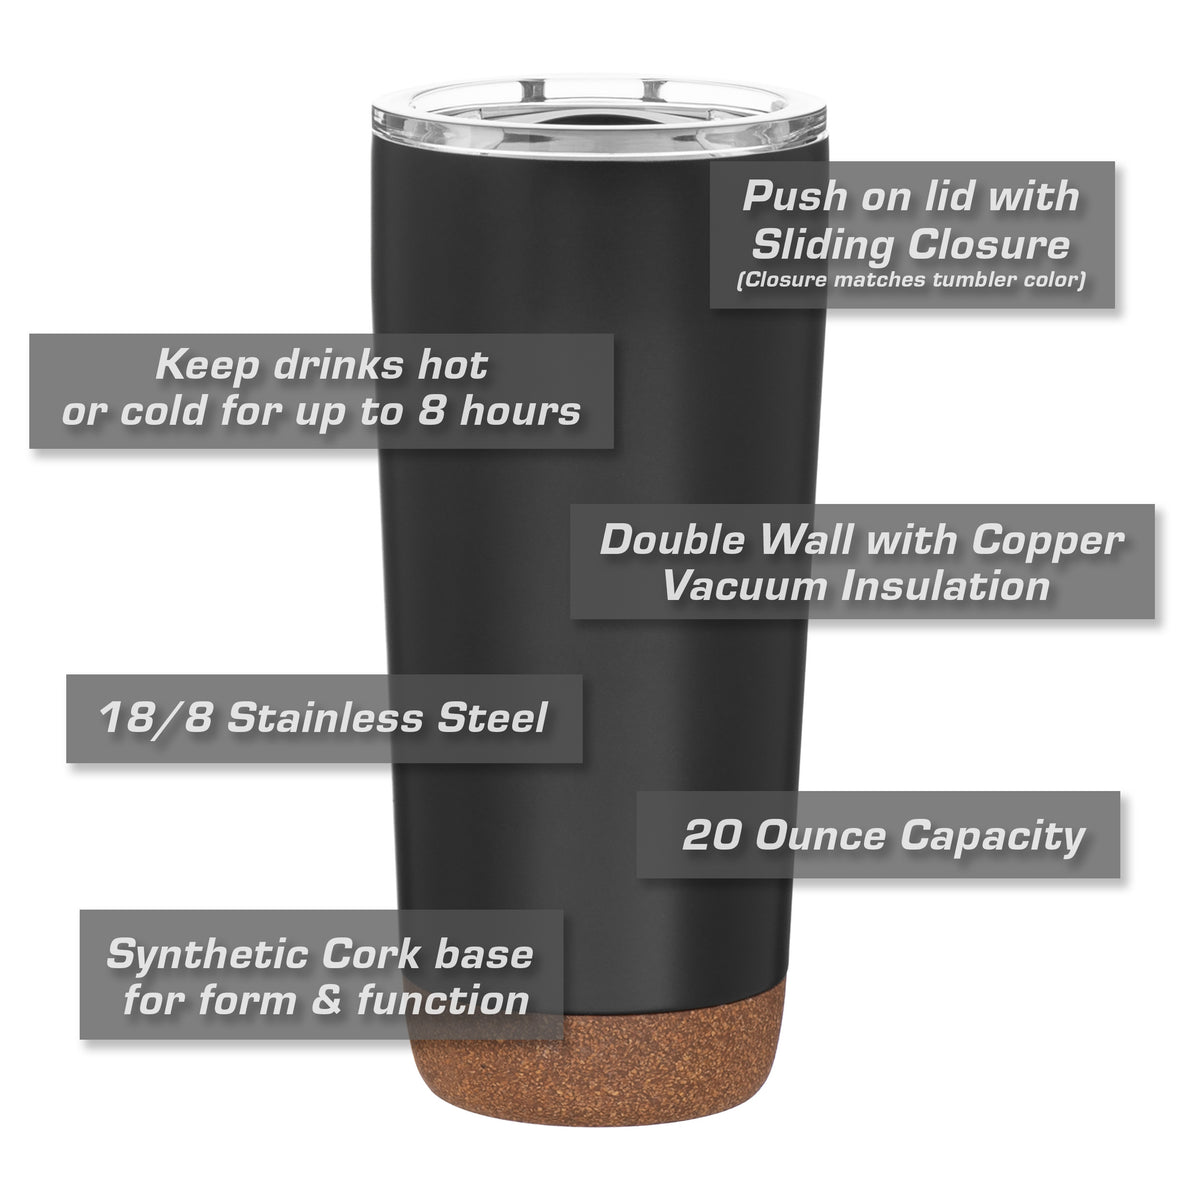 Pagani Huayra Insulated Stainless Steel Coffee Tumbler - 20 oz